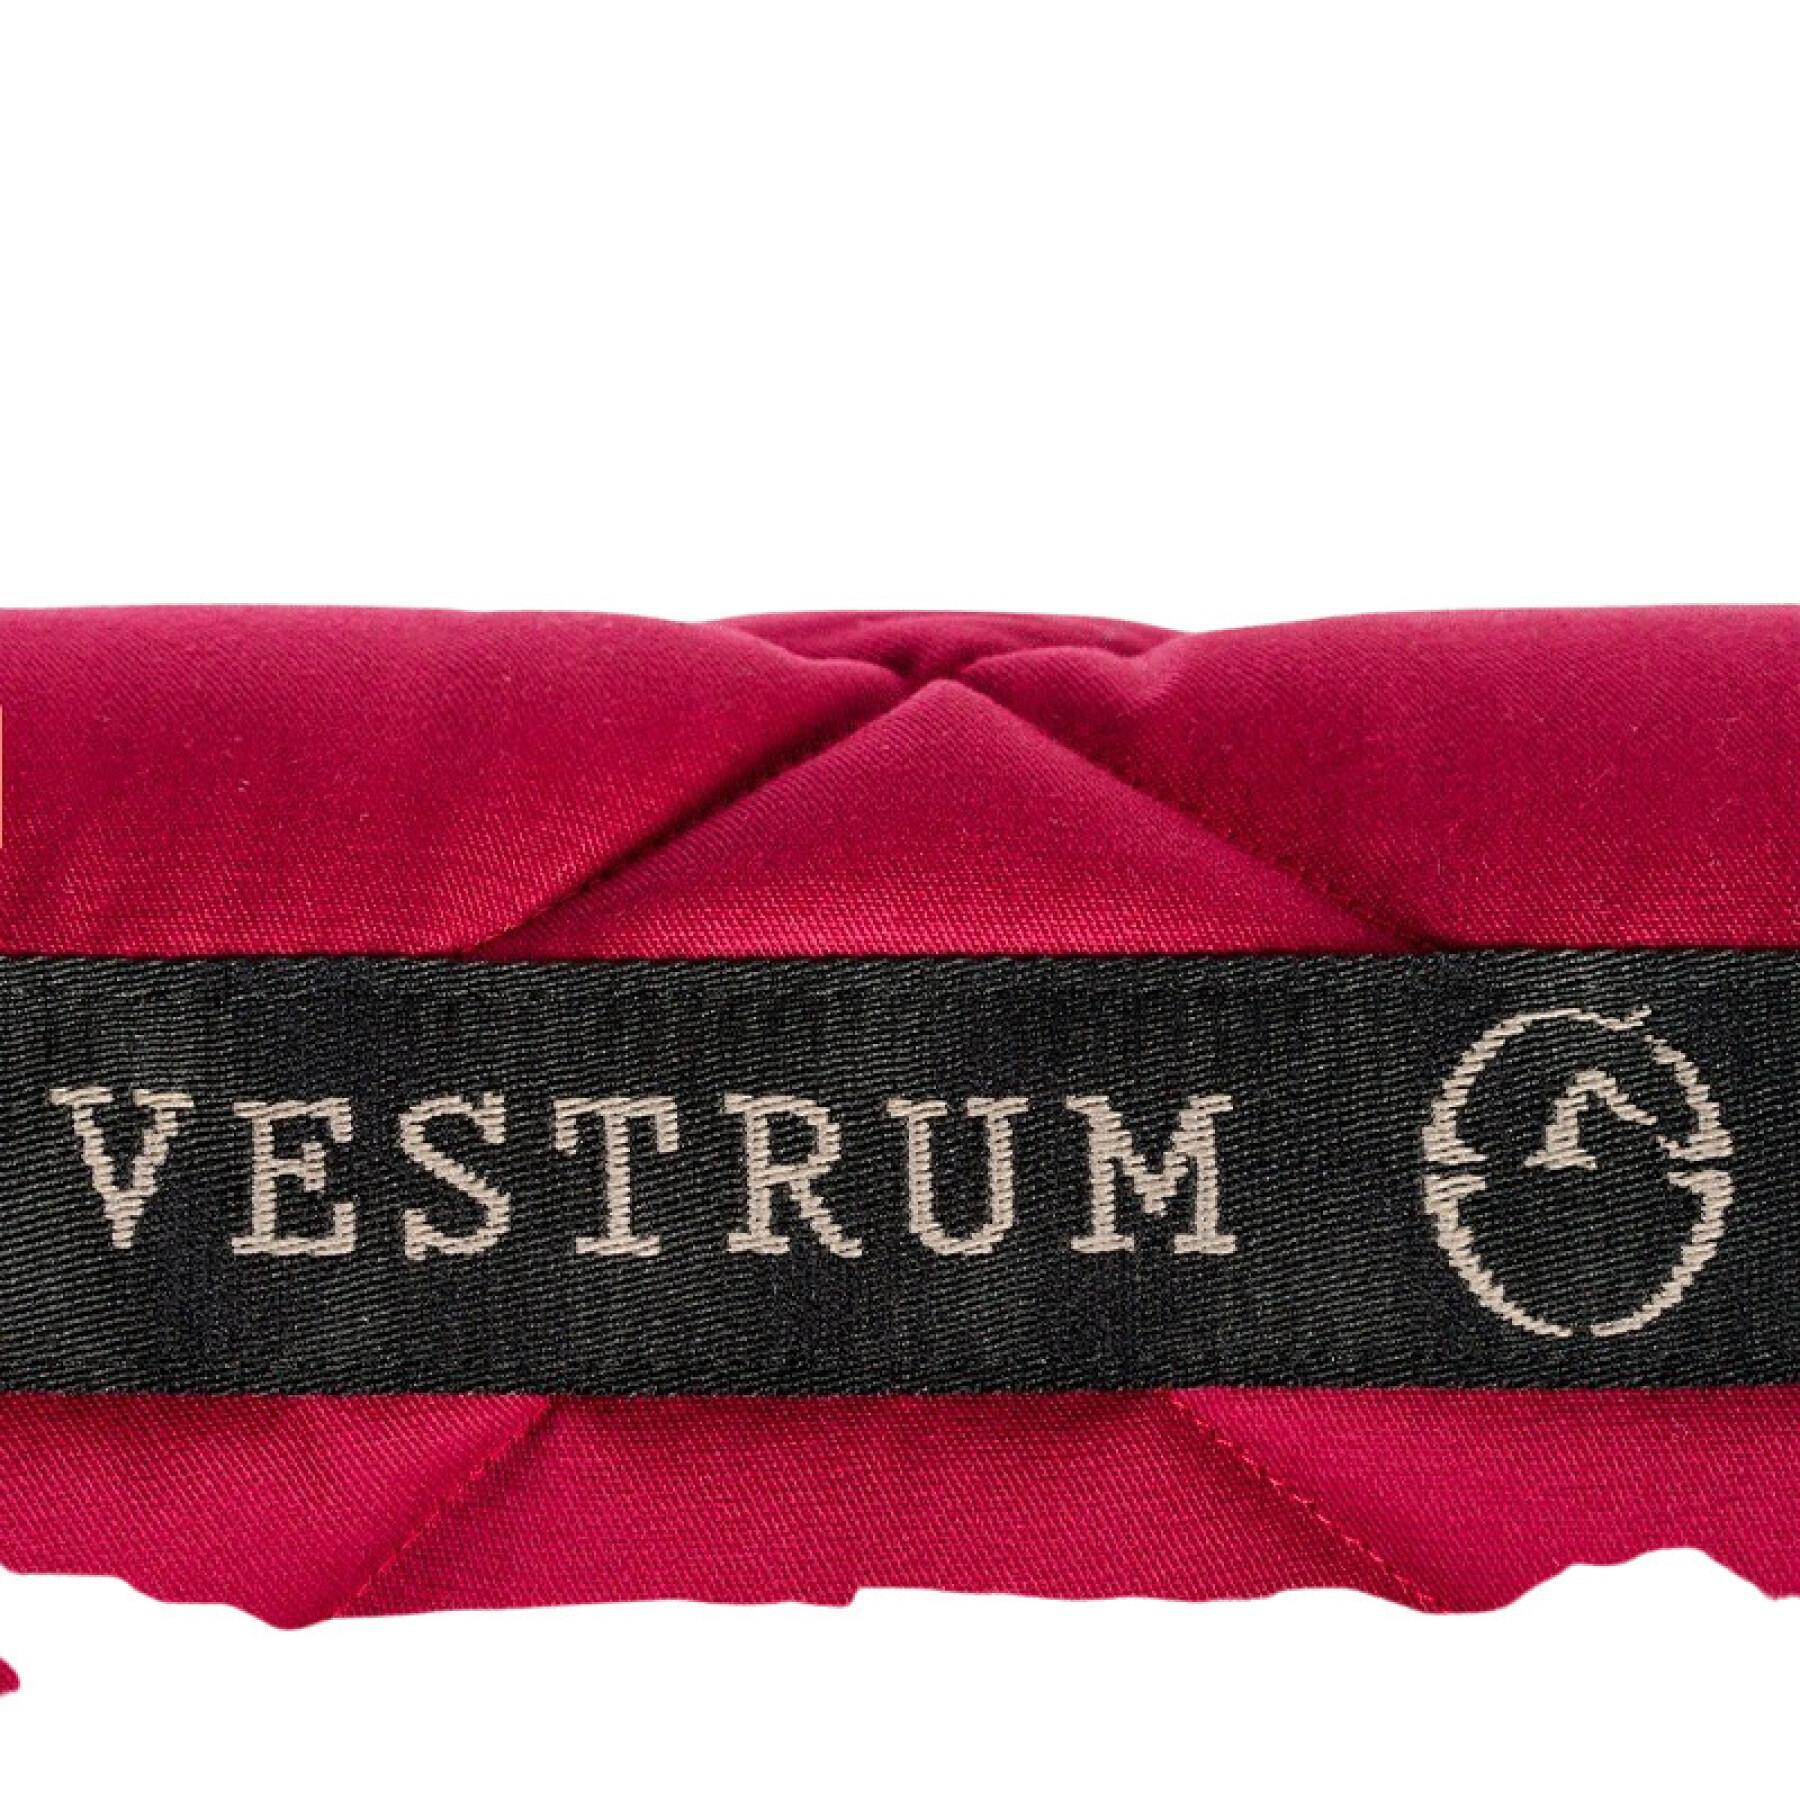 Dressage mat for horses Vestrum Chicago